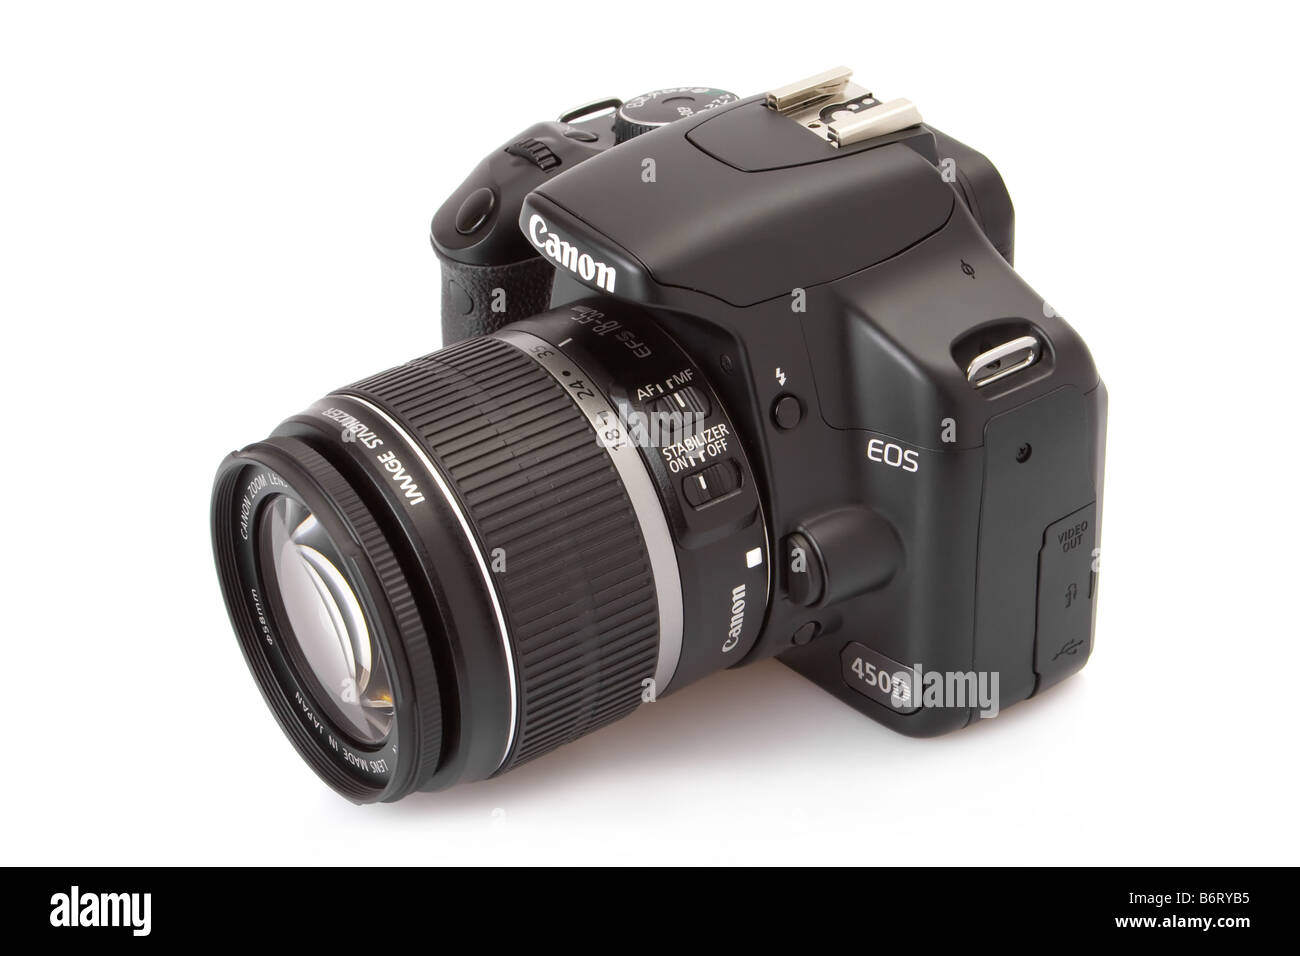 Canon EOS 450D (Rebel XSi), 12 megapixel digital slr, with the 18-55mm kit lens Stock Photo